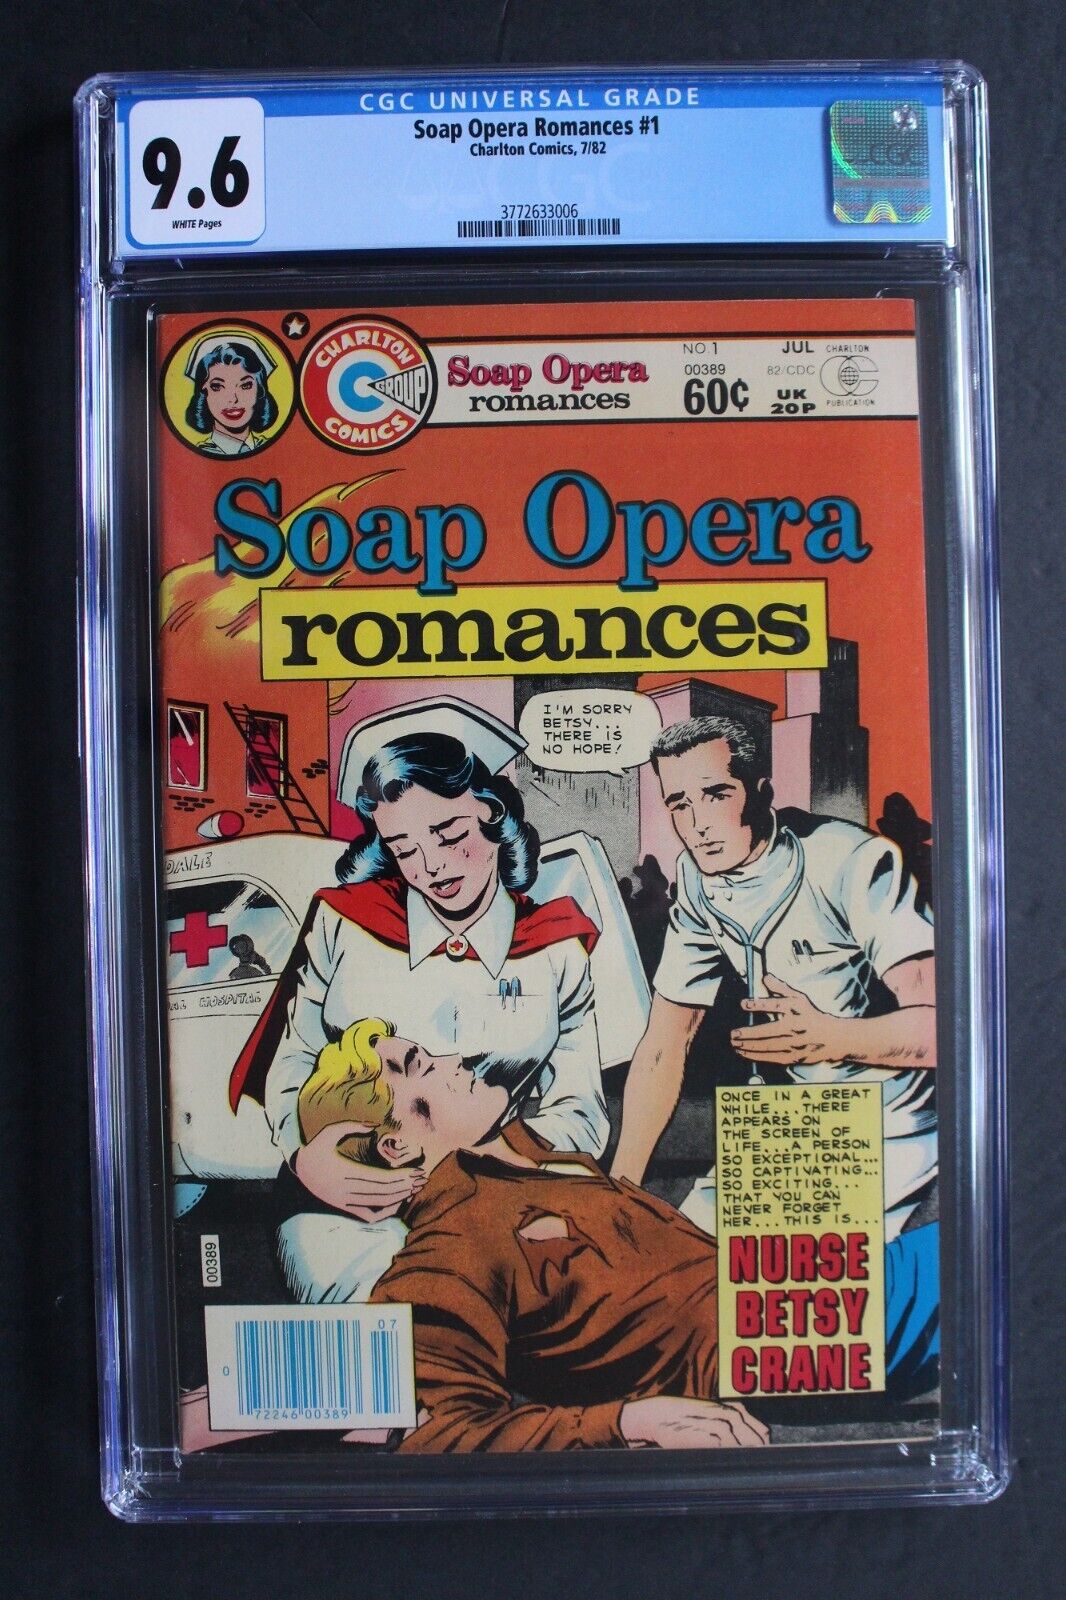 SOAP OPERA ROMANCES #1 Nurse Betsy Crane 1983 Giordano Charlton Scarce CGC 9.6